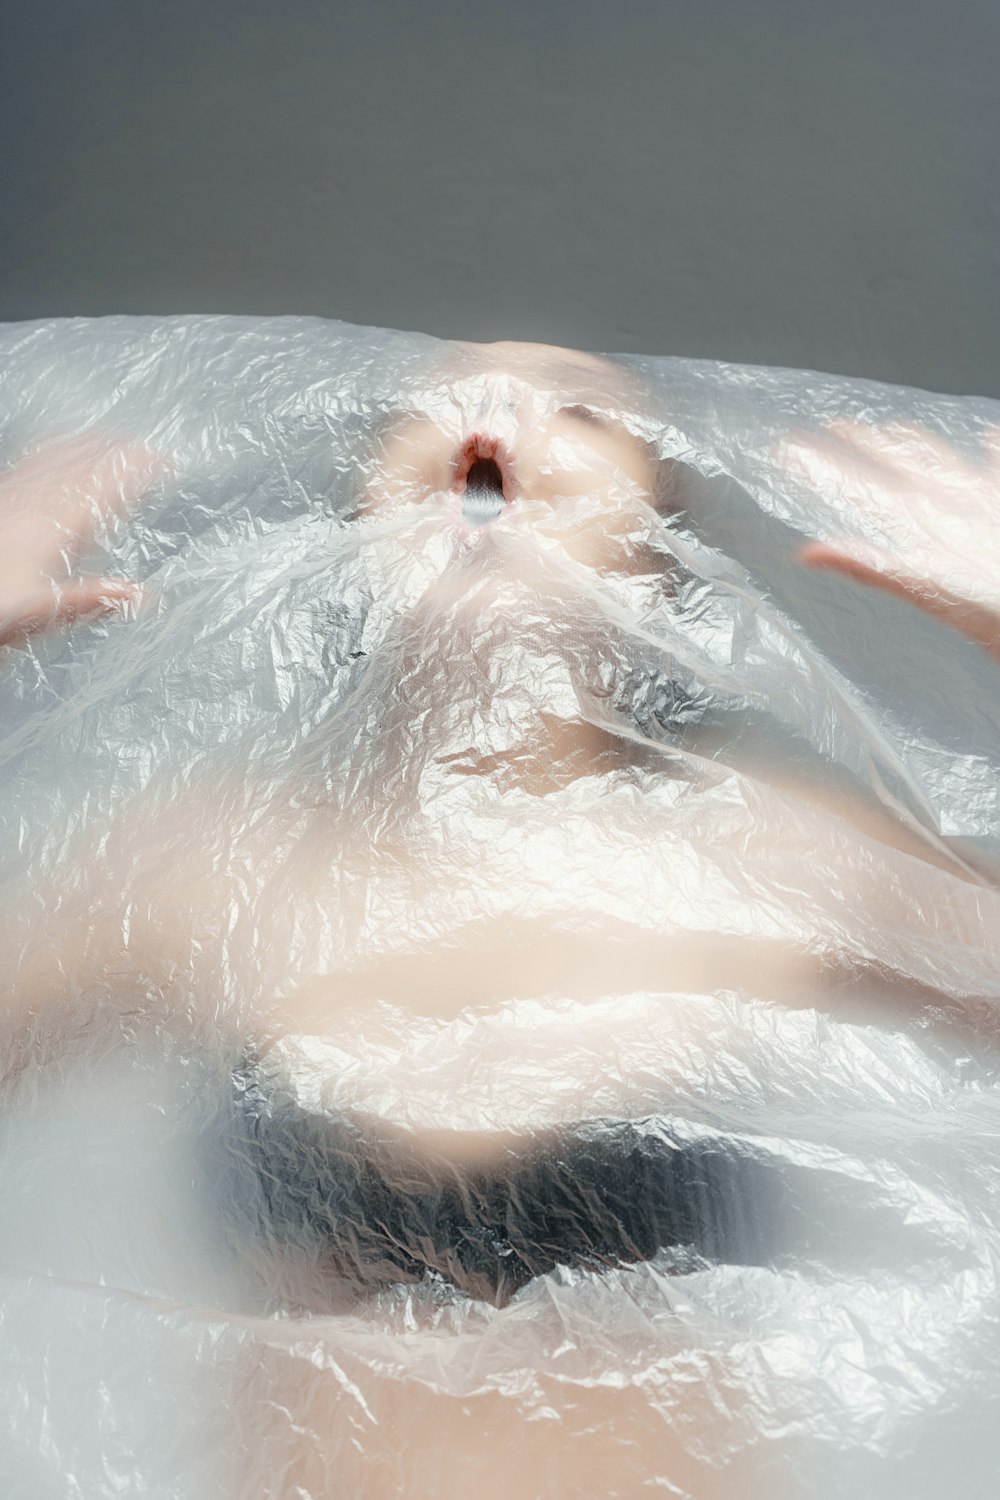 una donna sdraiata in una vasca da bagno ricoperta di plastica